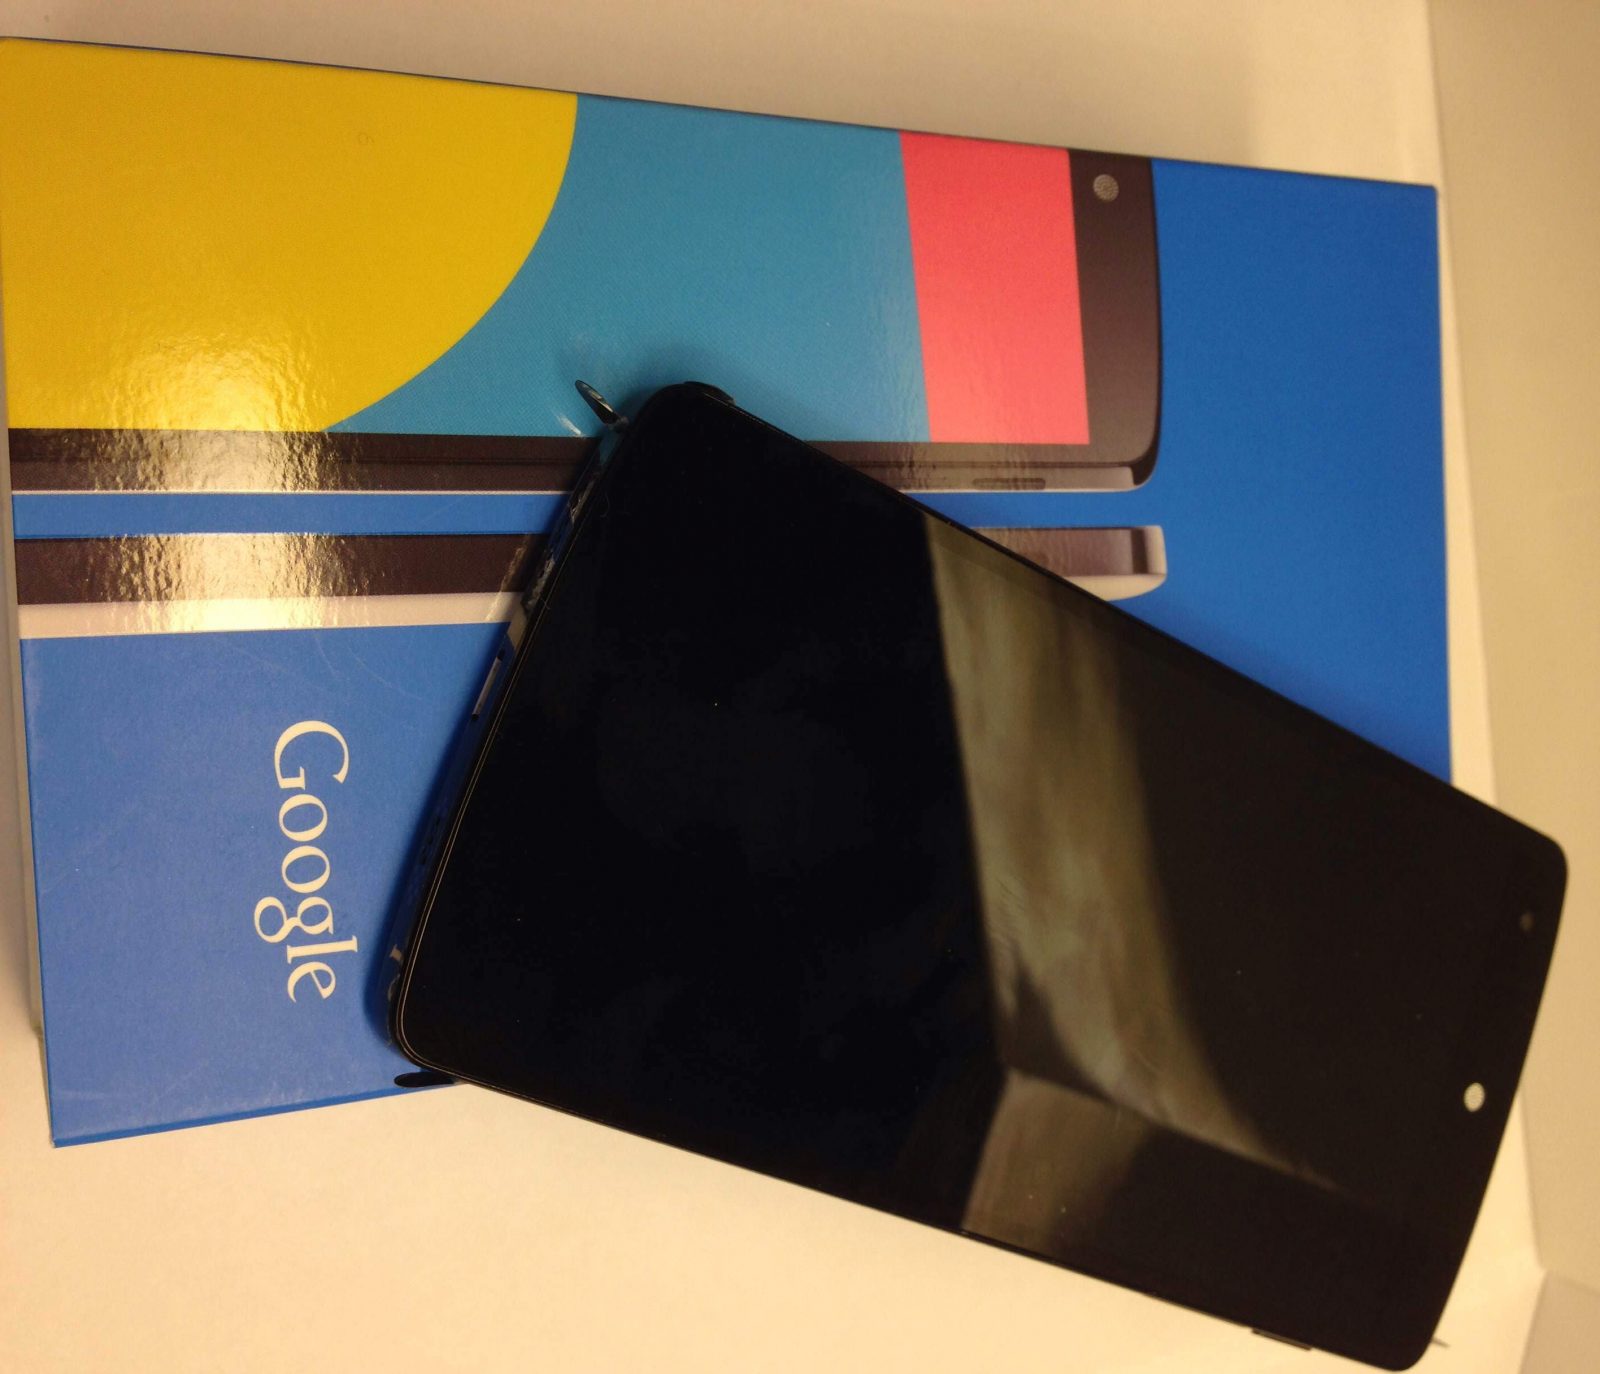 Google LG Nexus 5 Review Smartphone- Android KitKat 4.4 - Screen